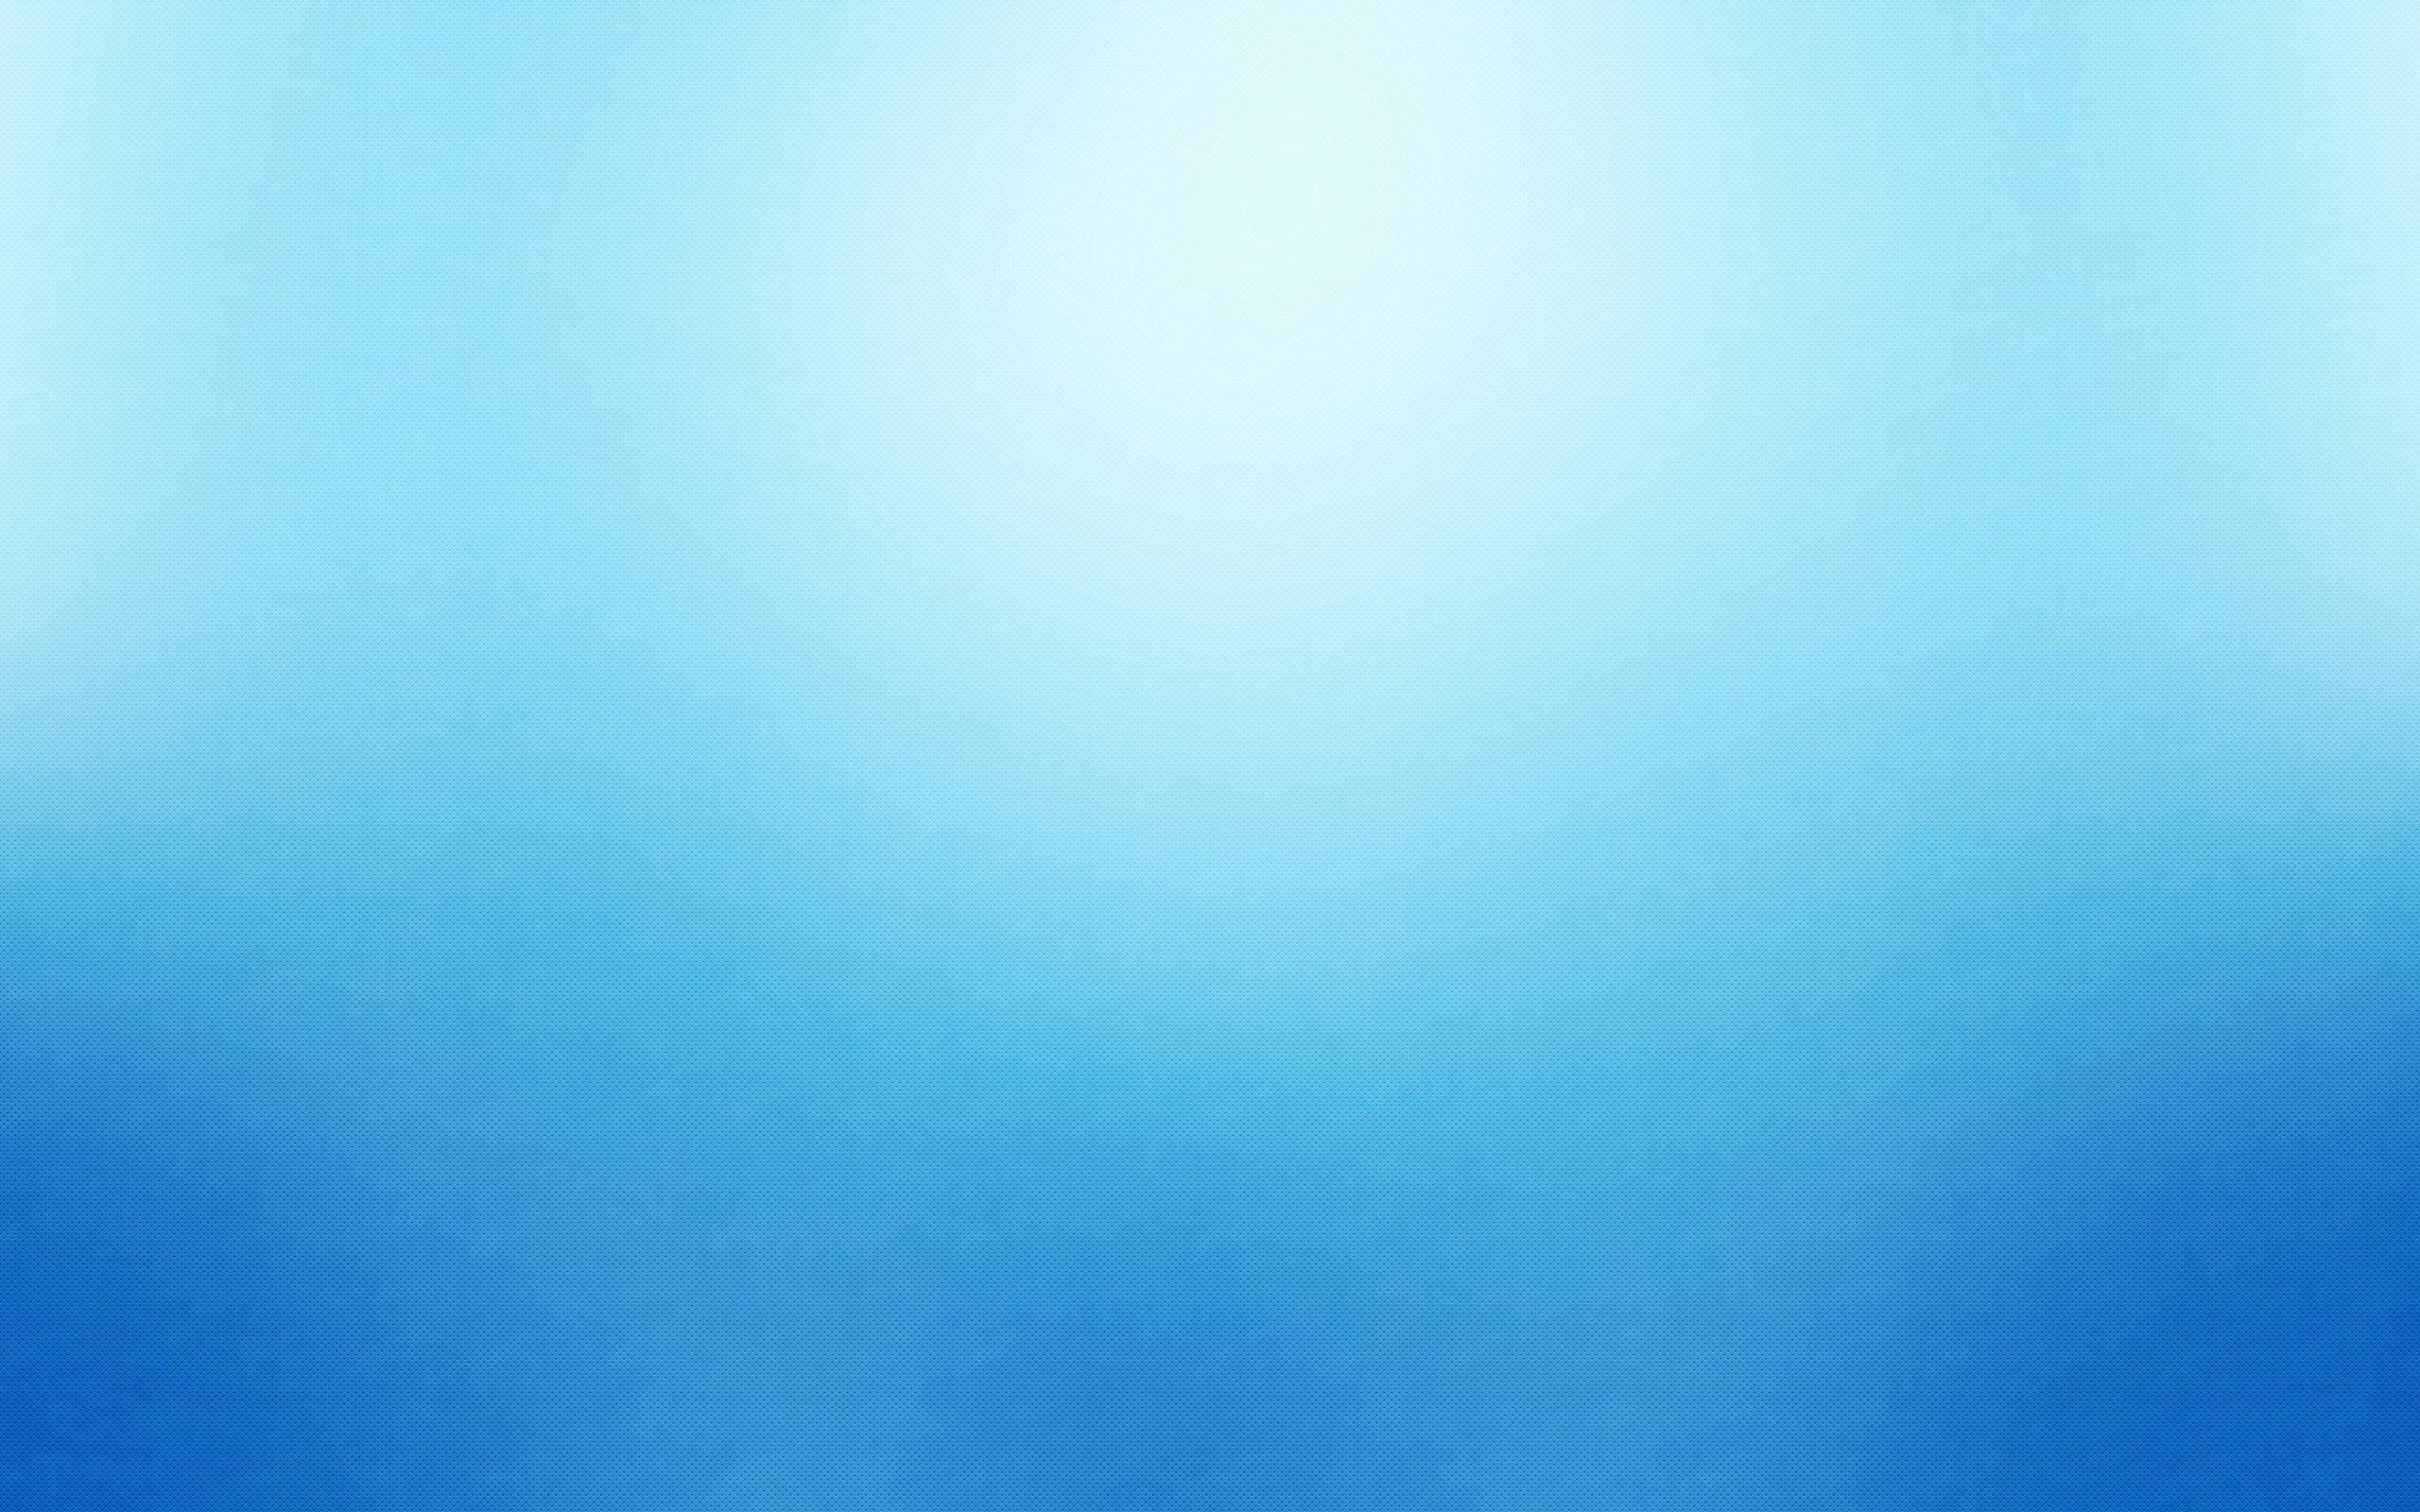 microsoft office logo light blue background